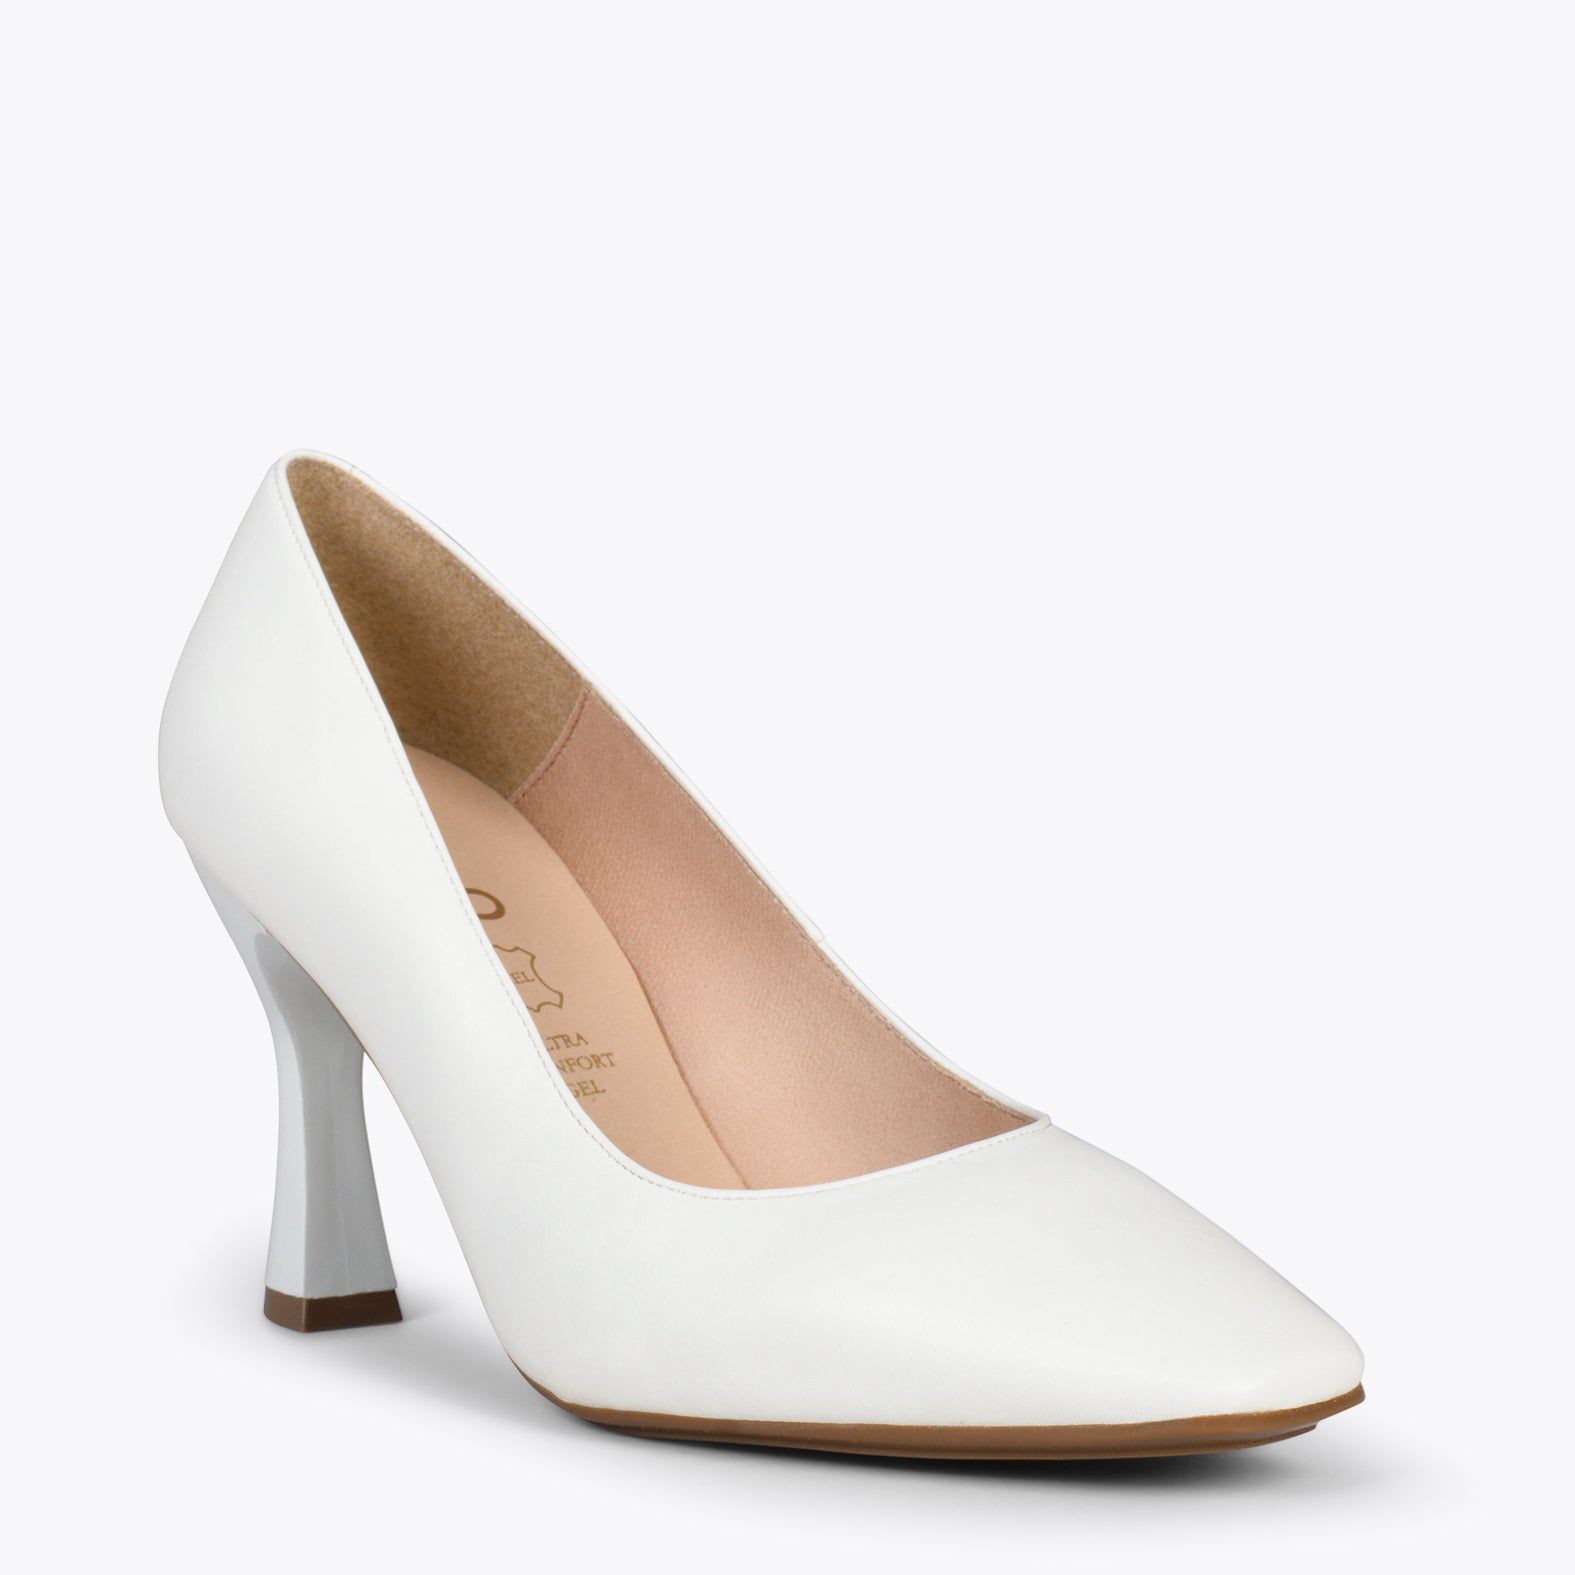 URBAN GLAM – WHITE bell shaped heel